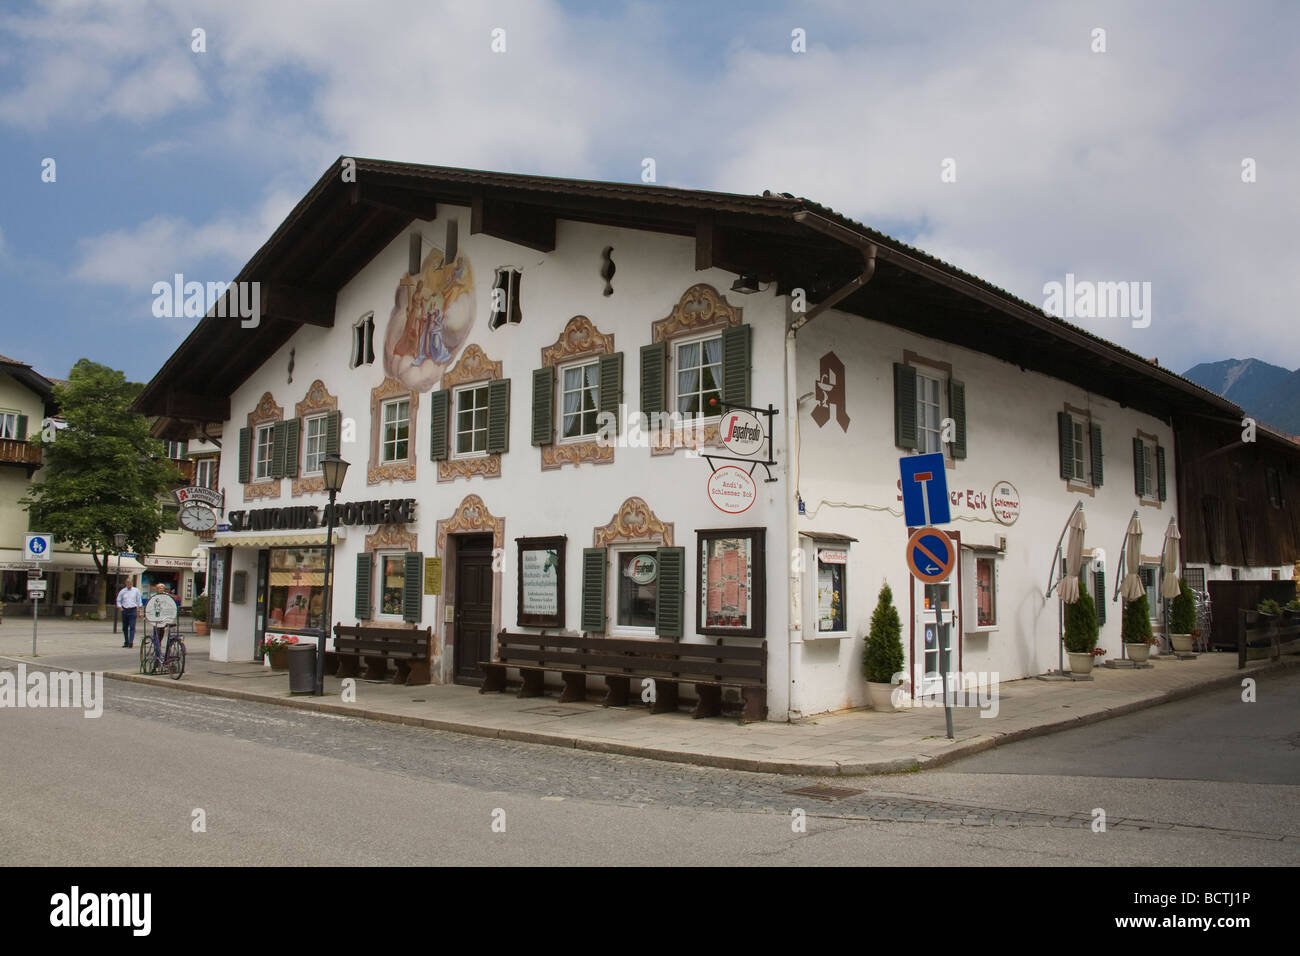 Garmisch Partenkirchen Bavaria Germany EU June Typical facades painted with frescoes luftlmalerei in this Bavarian ski resort Stock Photo